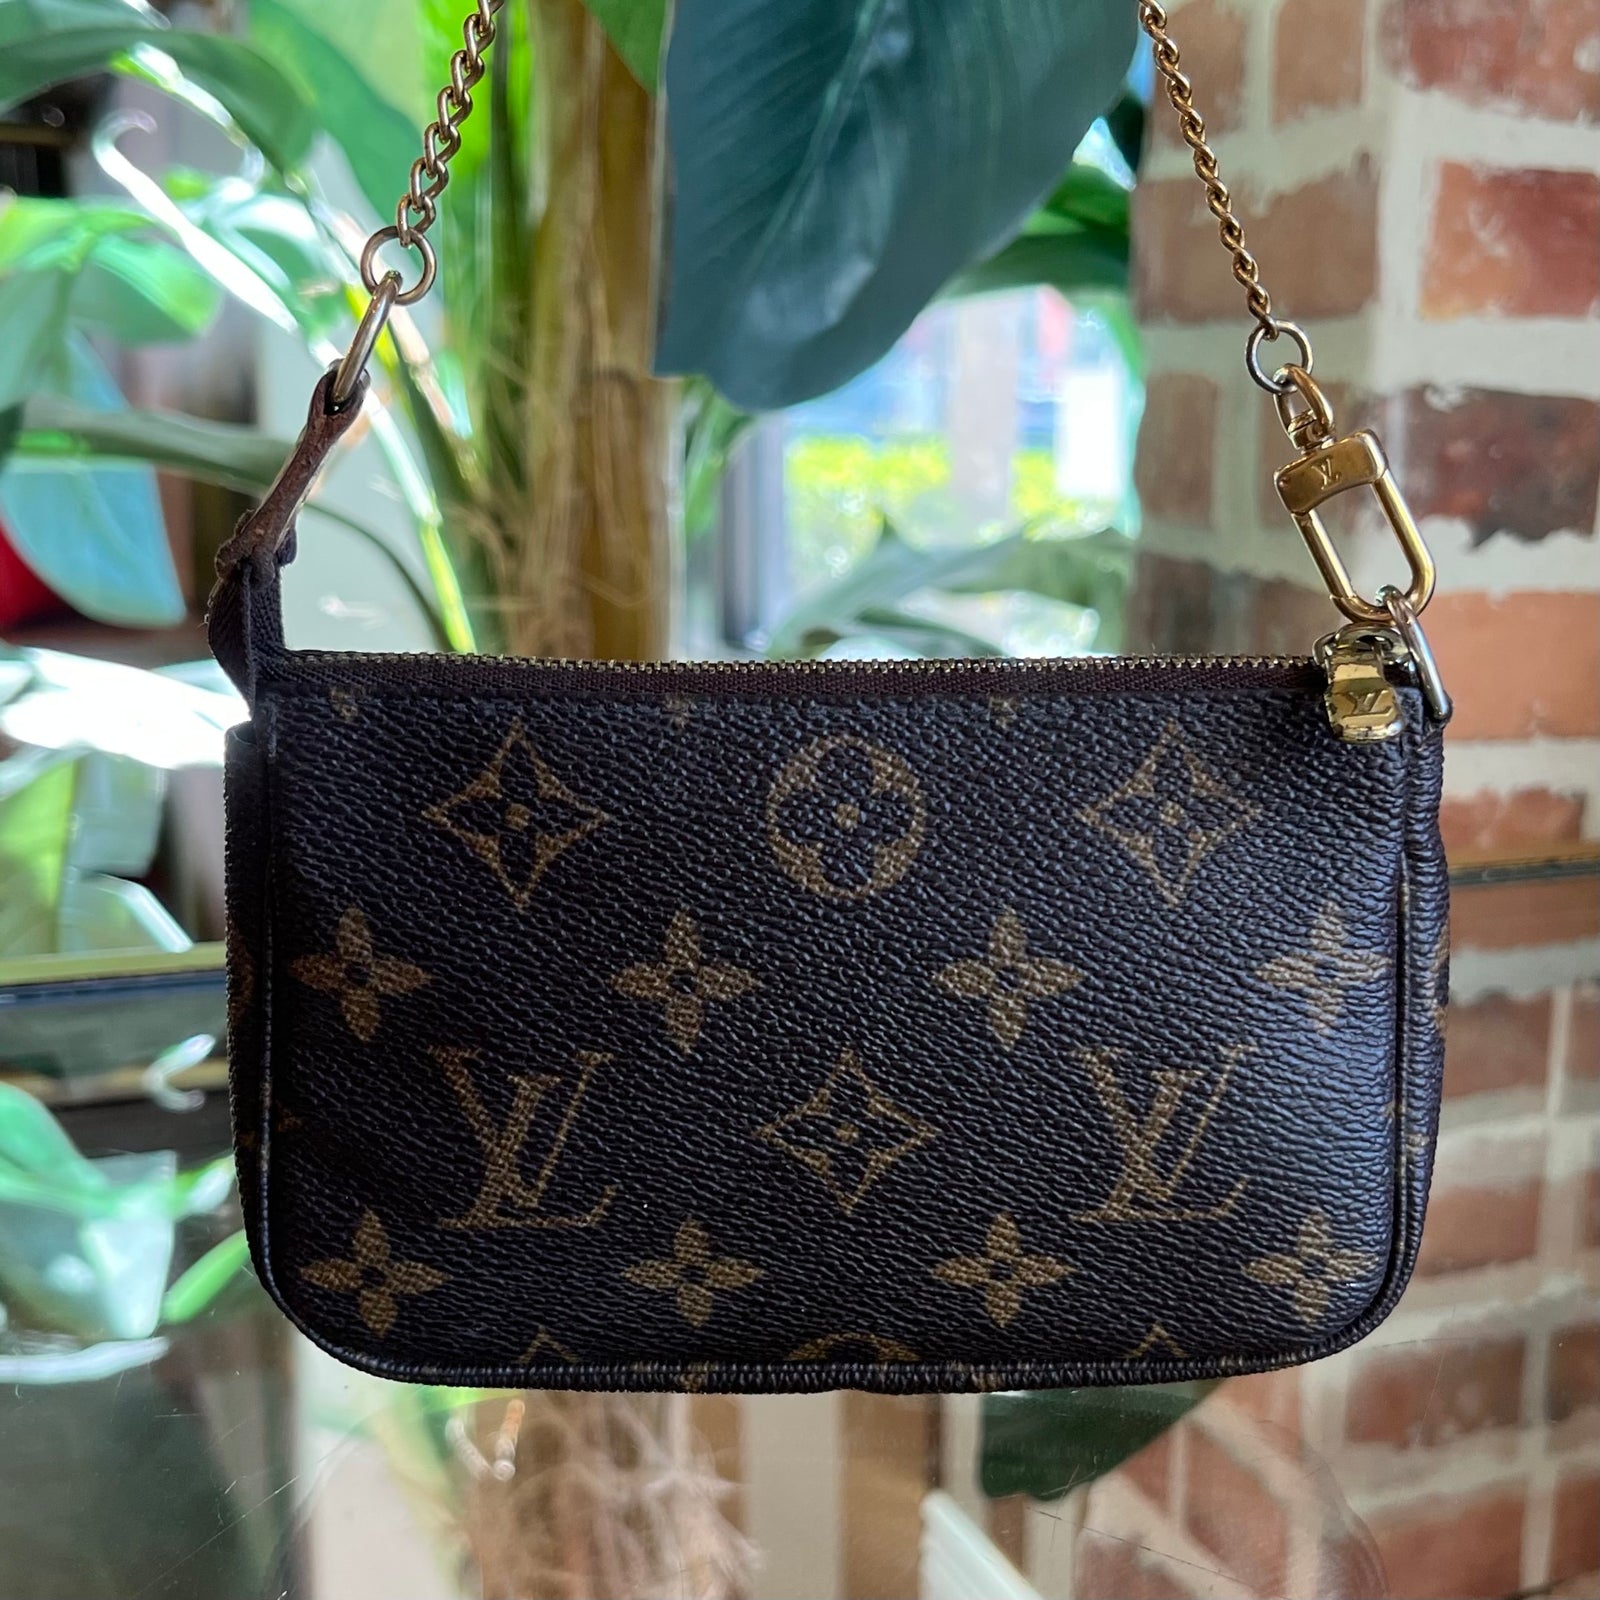 Under $500 Tagged Type_Handbags - The Purse Ladies